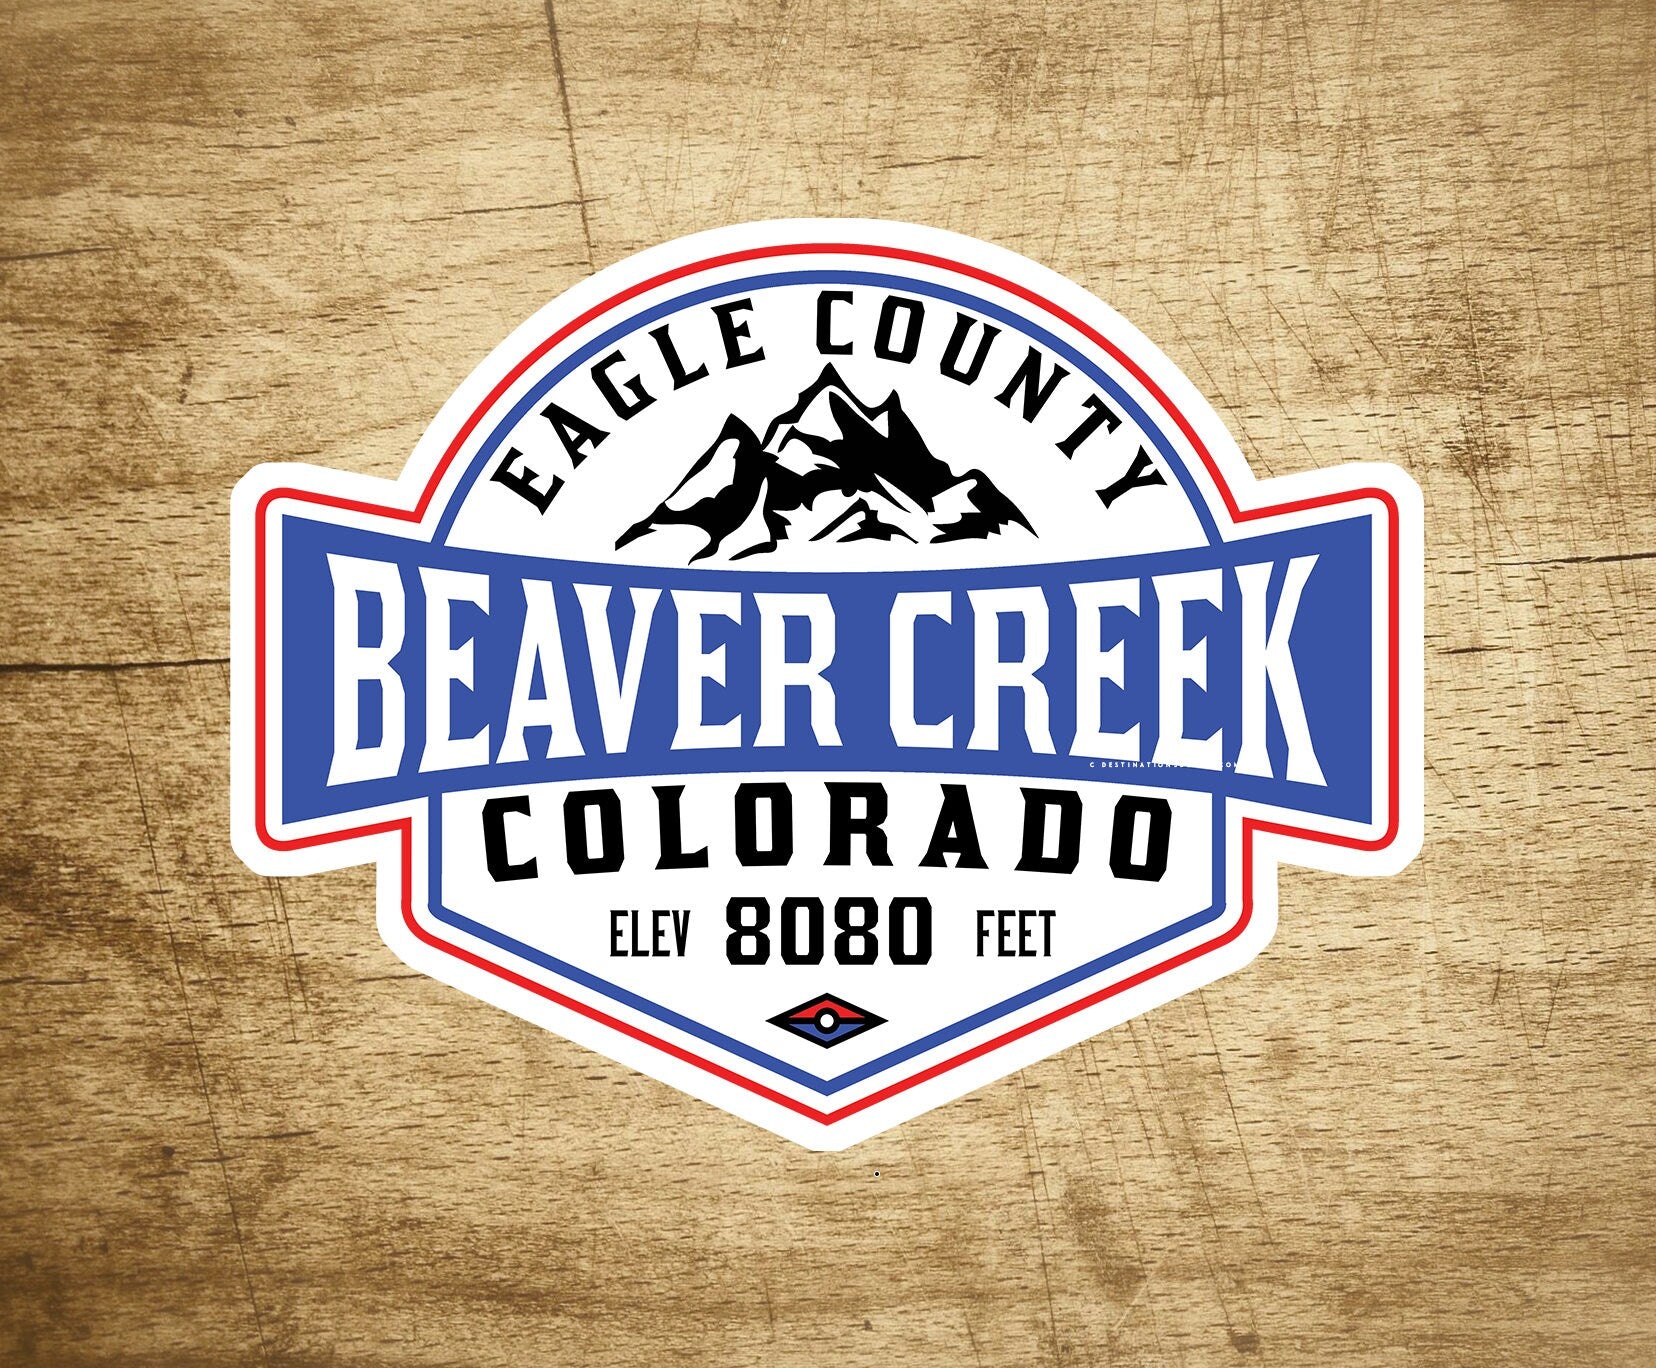 Ski Beaver Creek Colorado Decal Sticker 3 1/2" x 2 7/8" Skiing Snowboarding